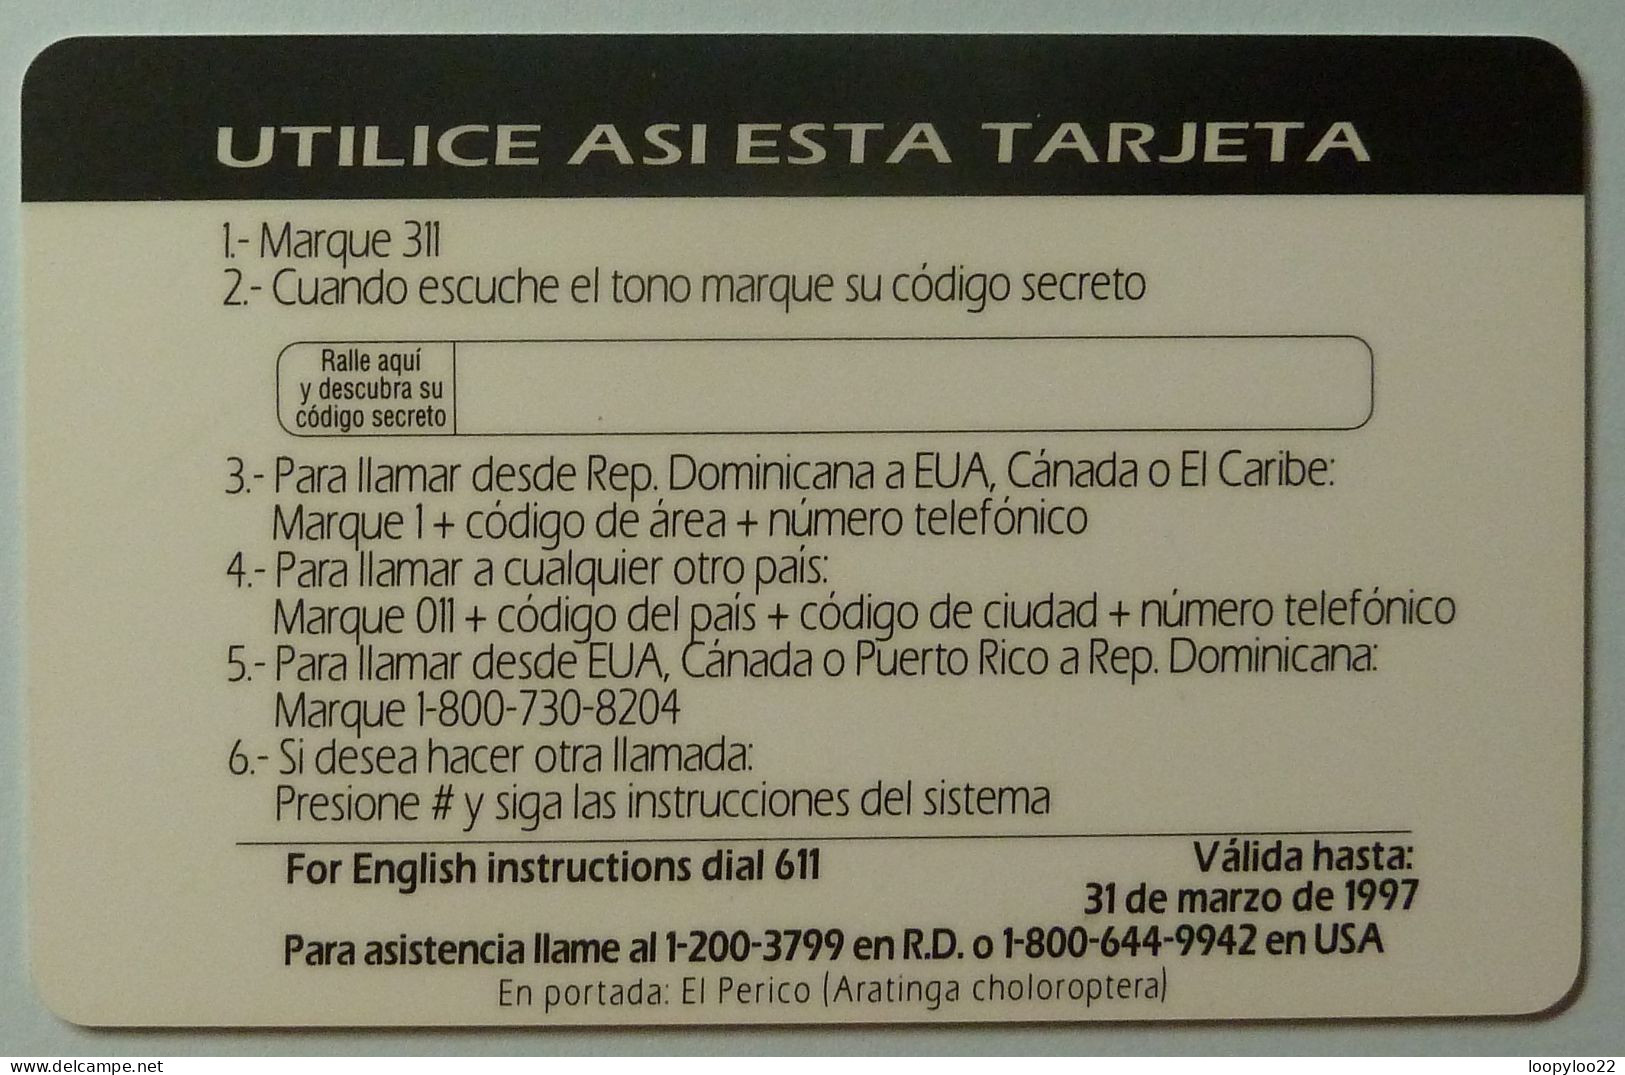 DOMINICAN REPUBLIC / DOMINICANA - Codetel - Remote Memory - Comuni Card - 1997 - $95 - Specimen - Green Parrots - Dominik. Republik